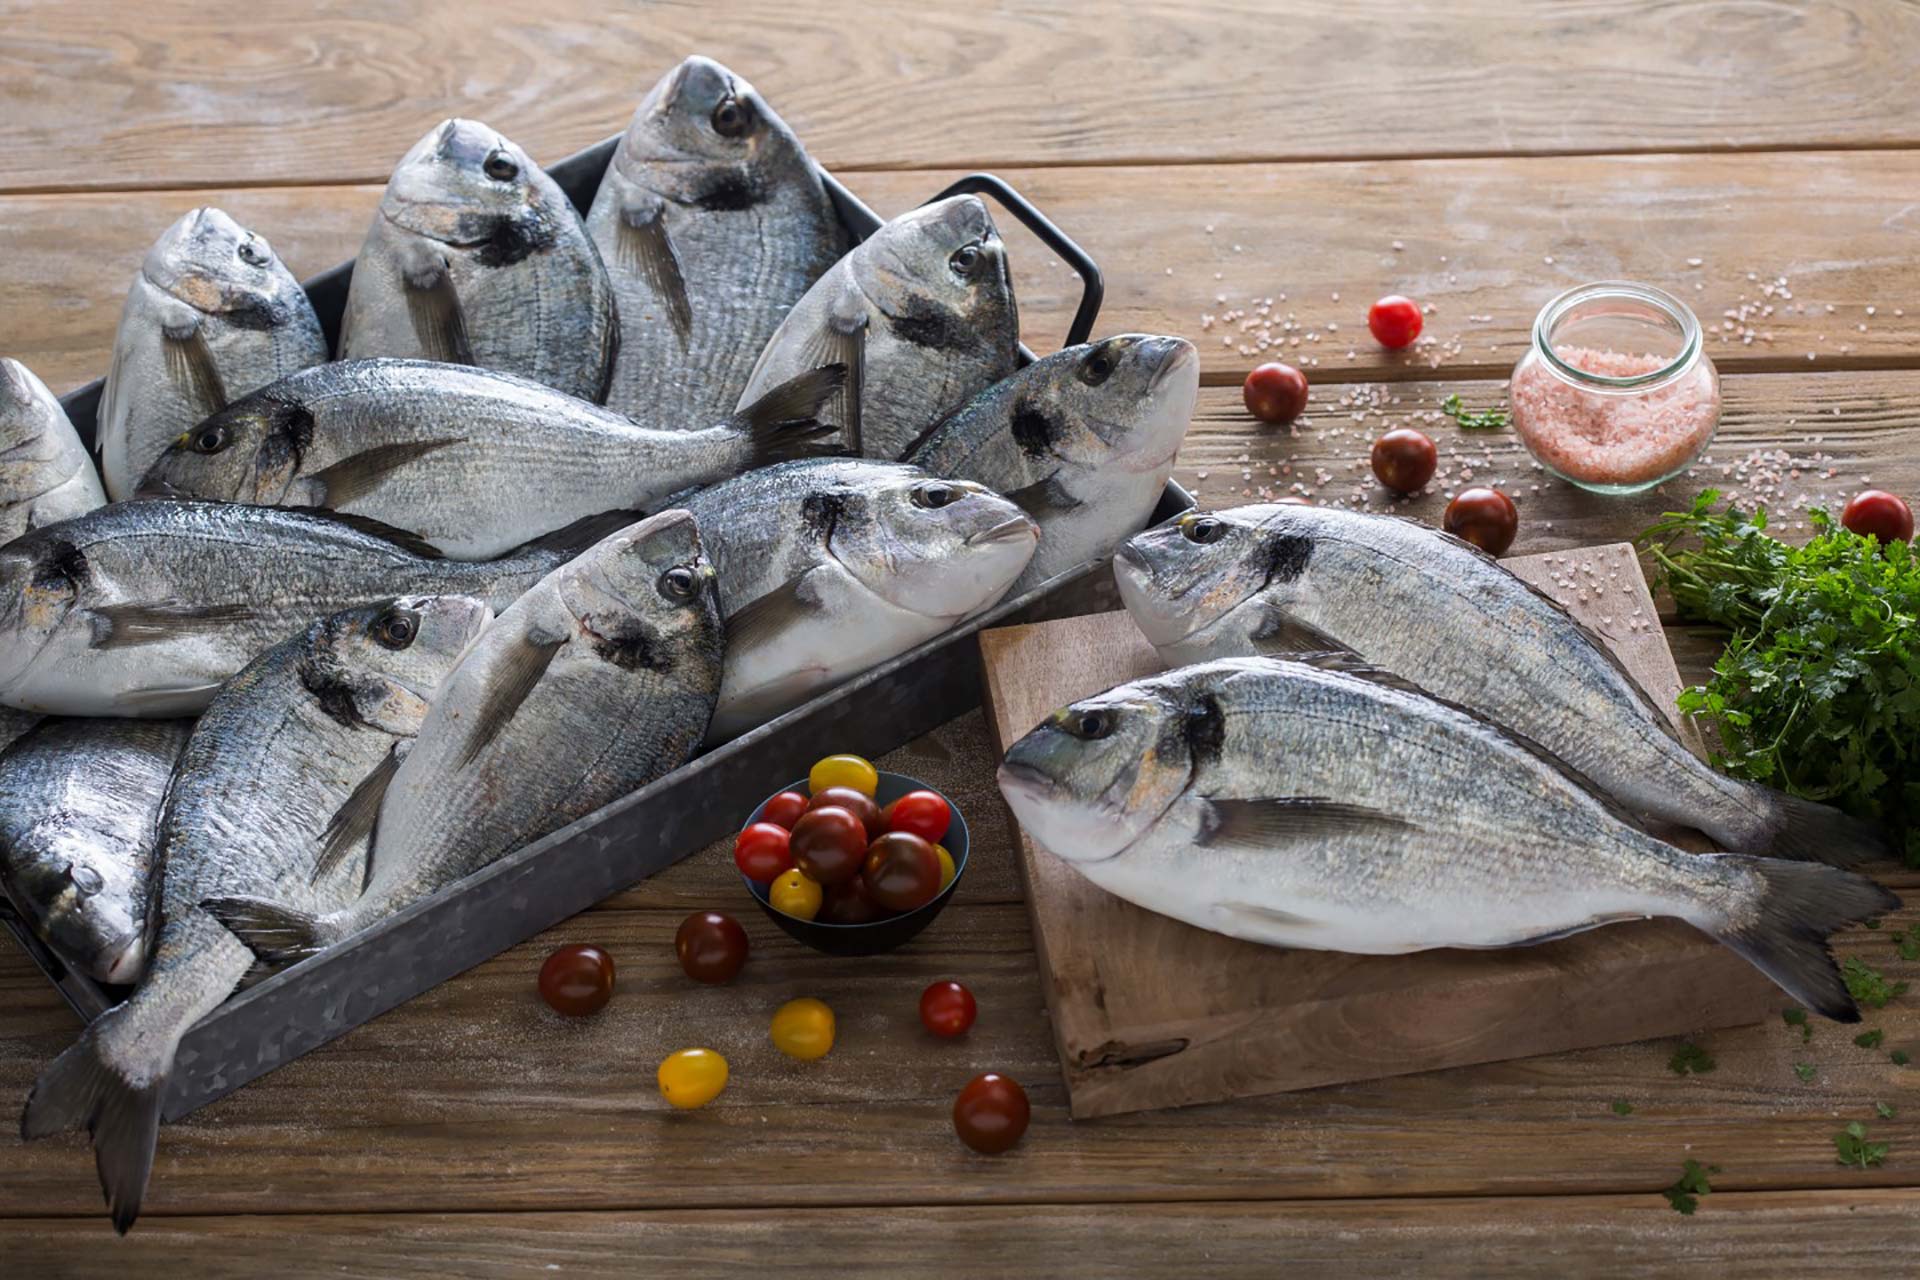 Kefalonia Fisheries / Seafood Products - Organic Sea Bream